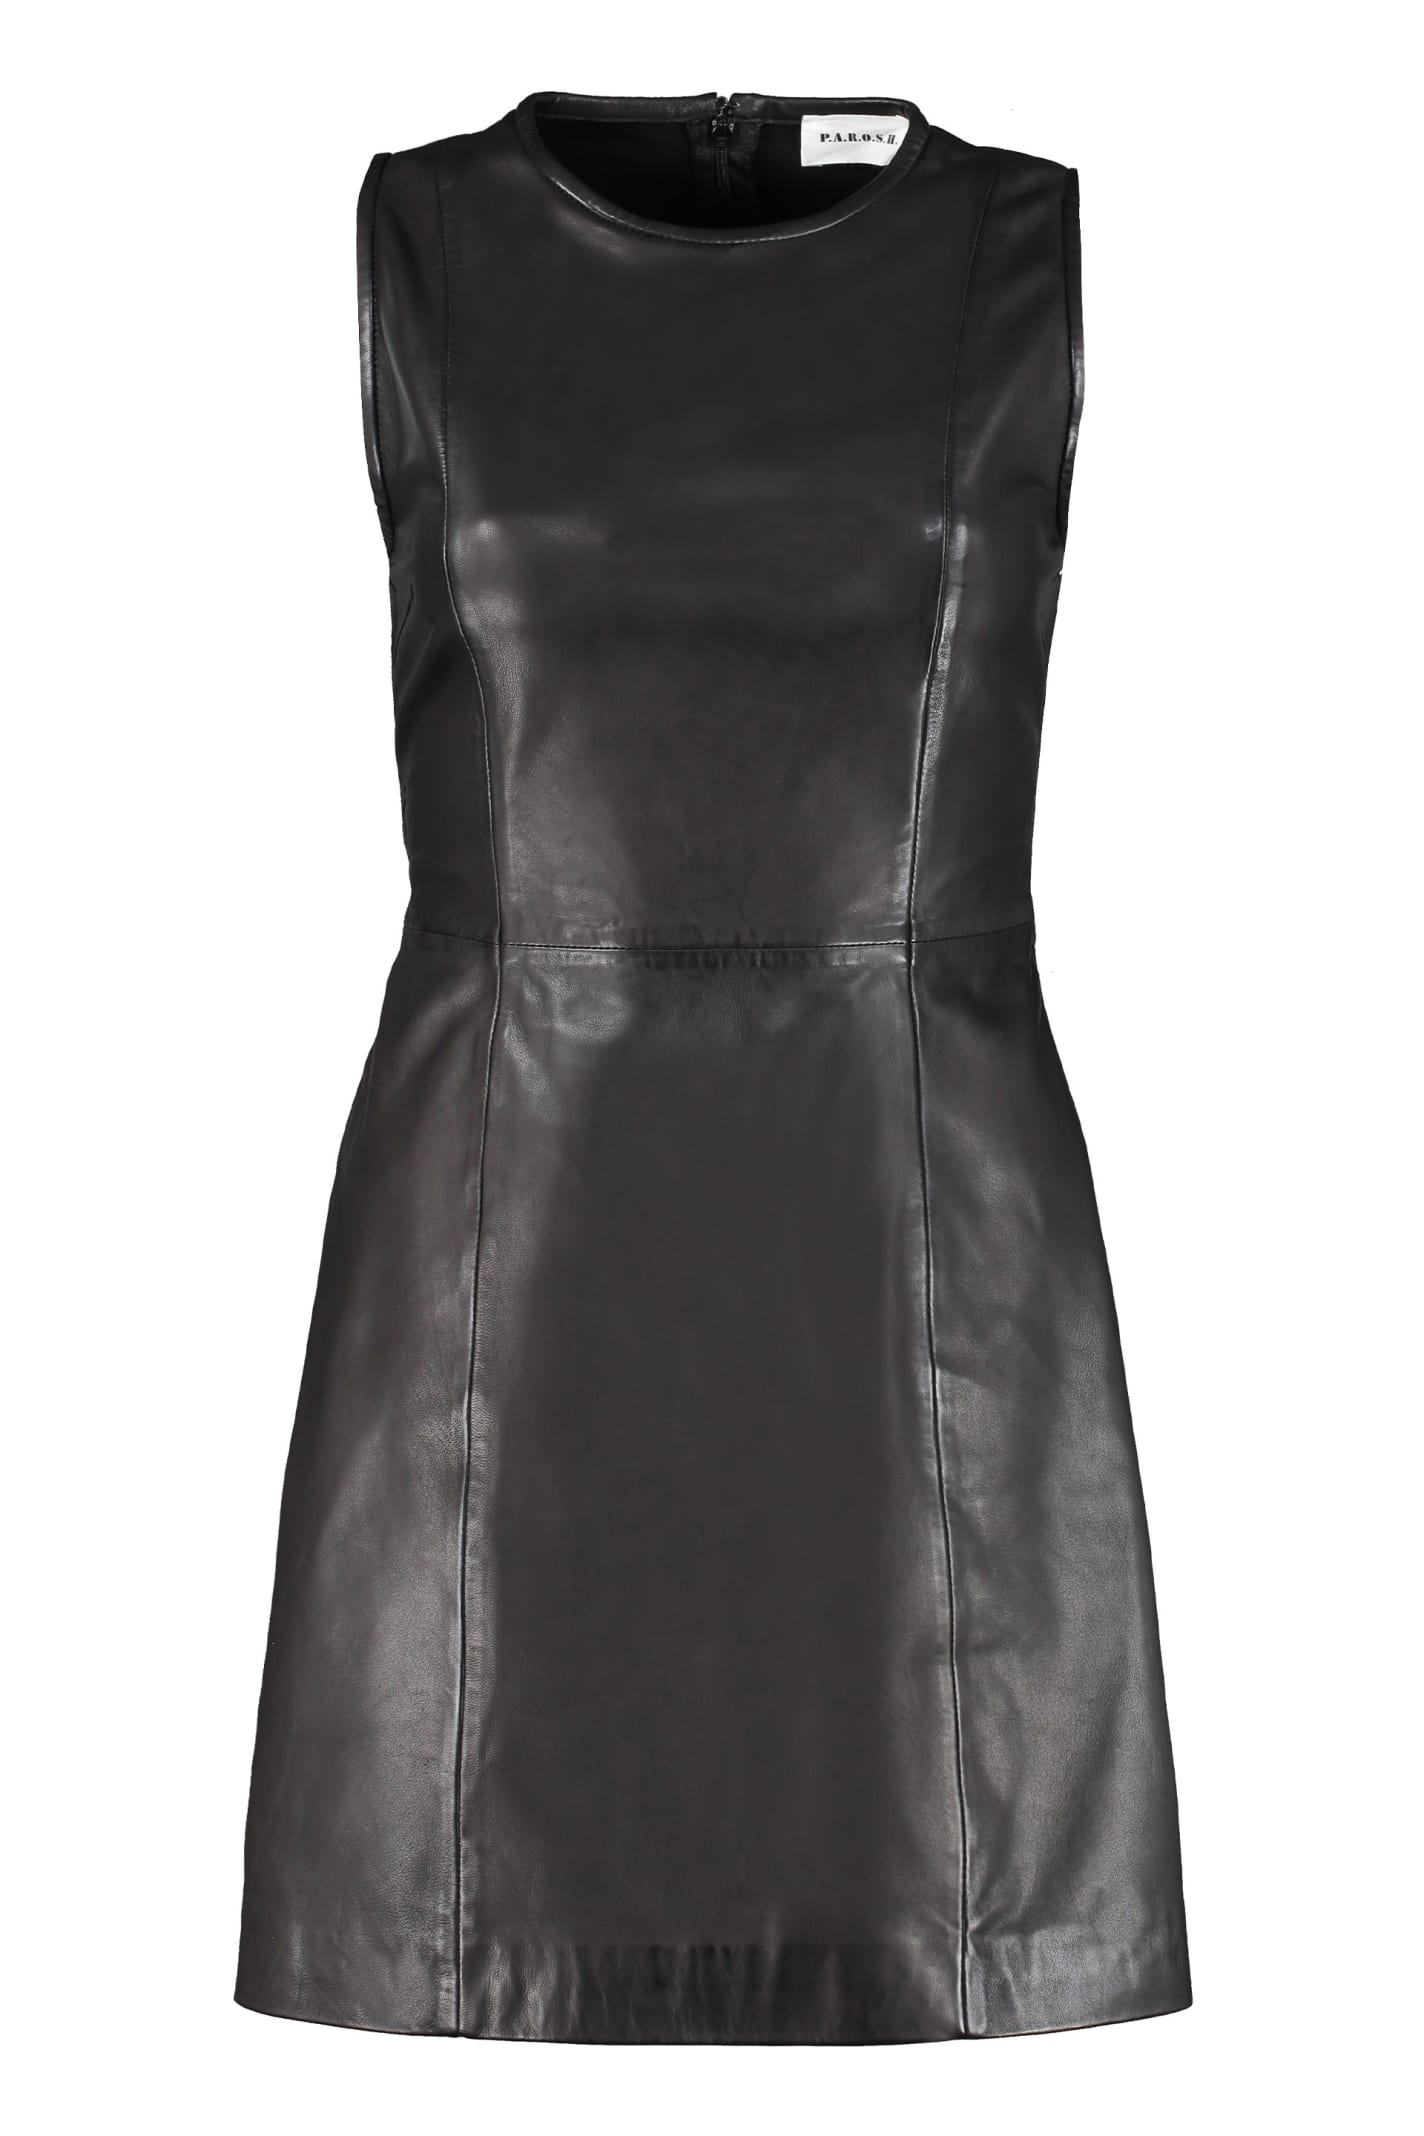 Parosh Maciockx Leather Mini Dress